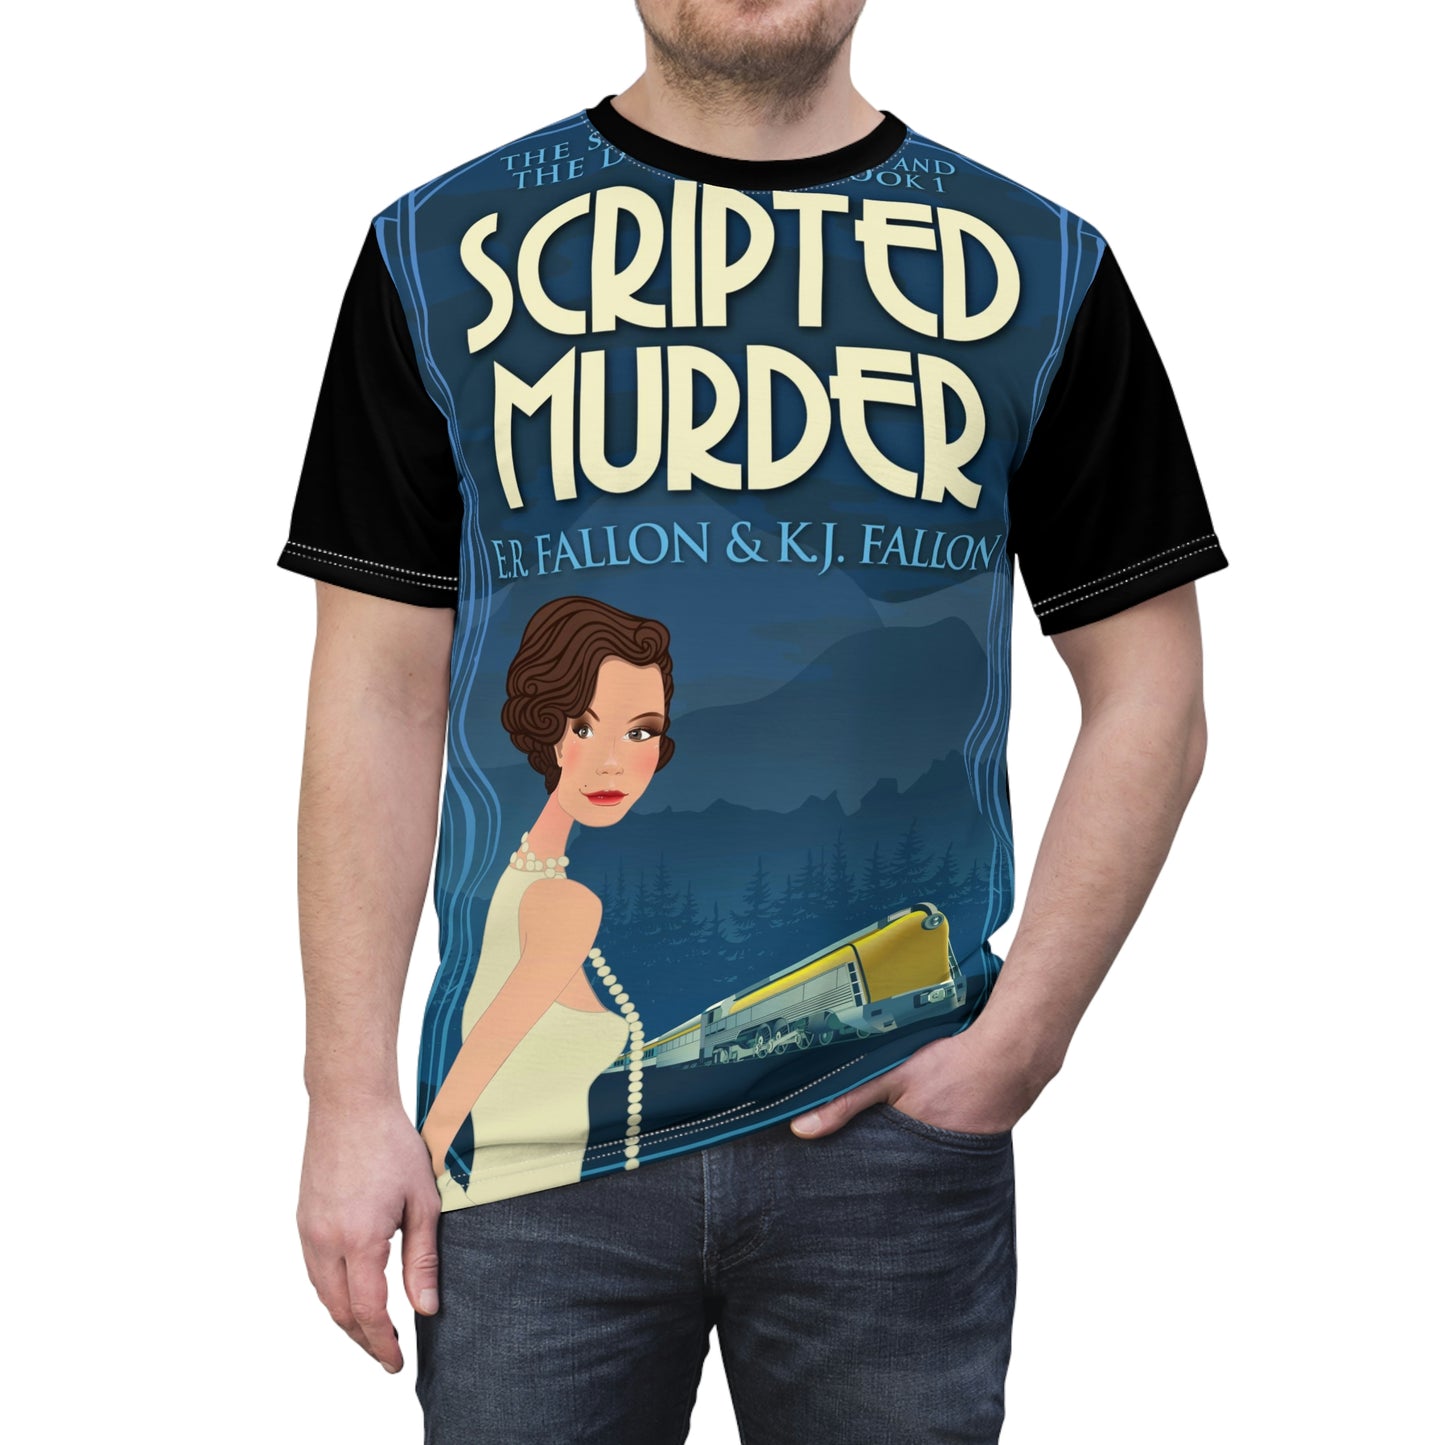 Scripted Murder - Unisex All-Over Print Cut & Sew T-Shirt